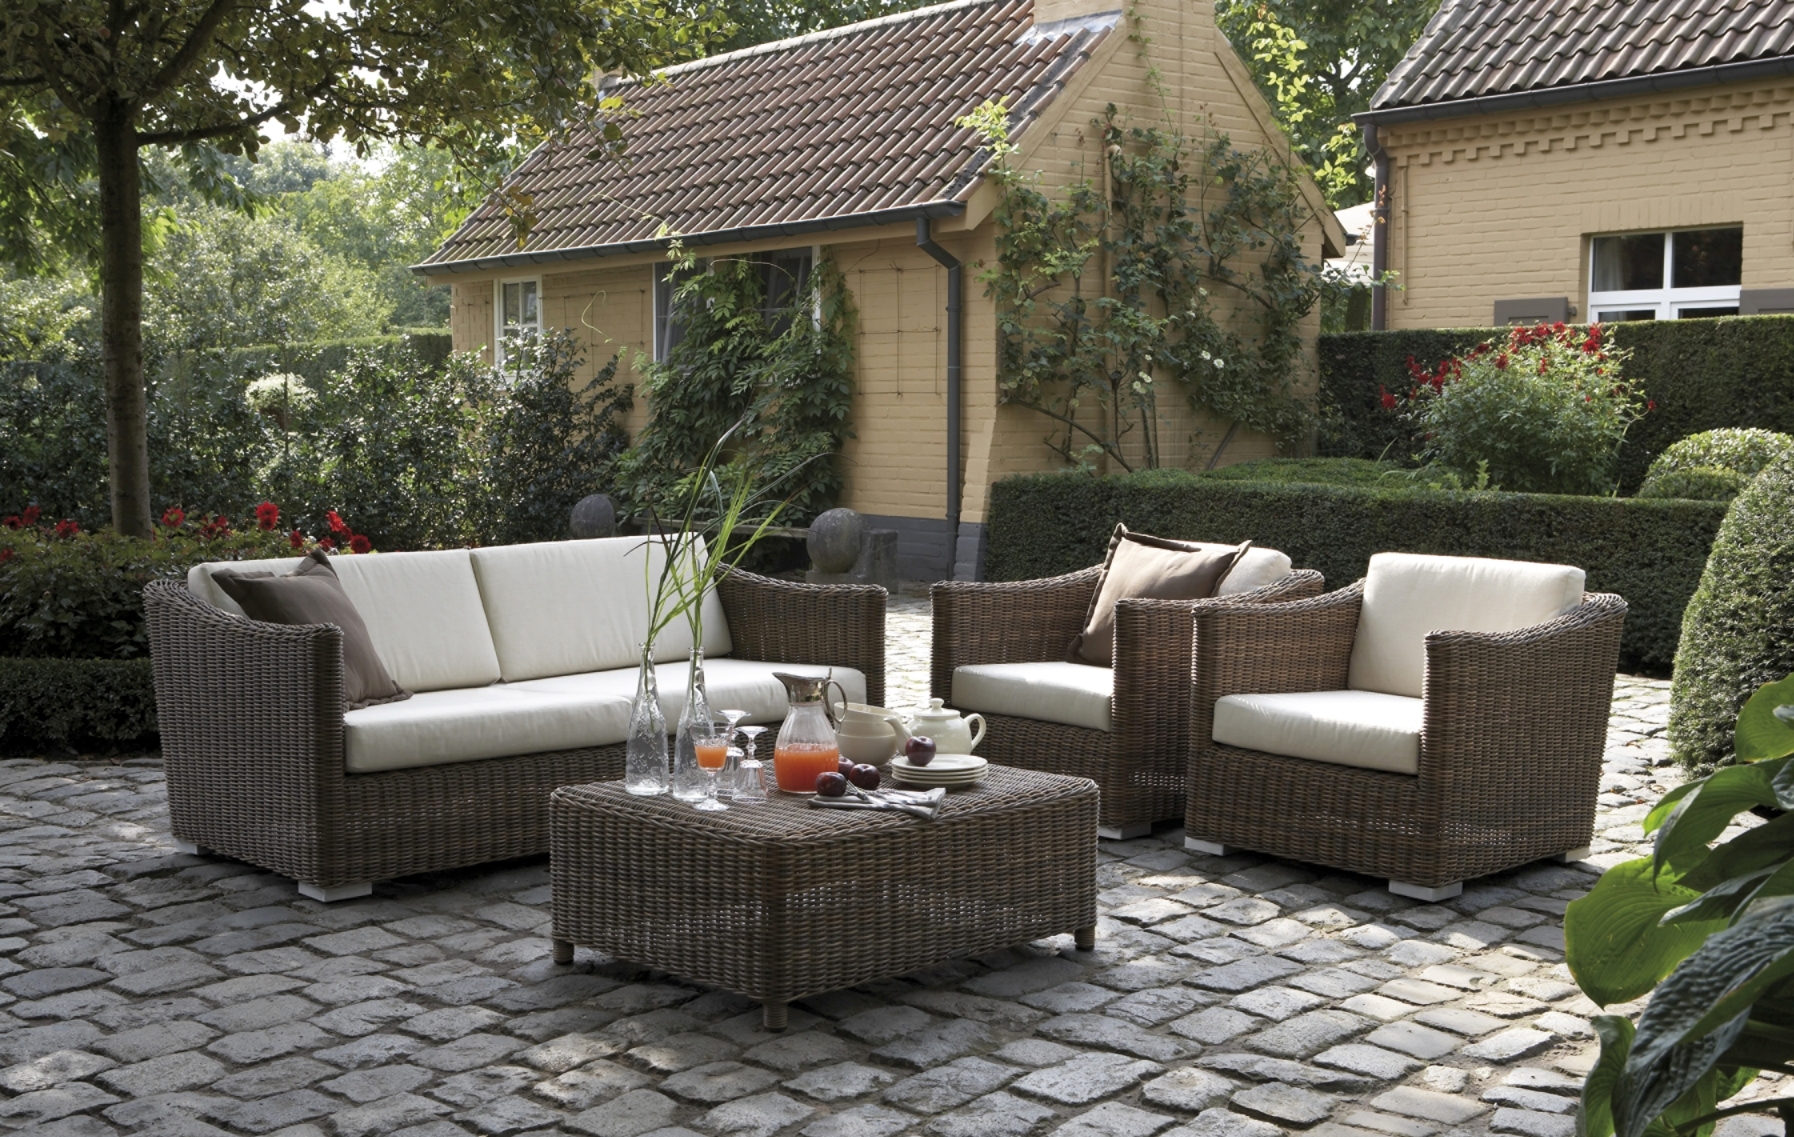 armarios exterior terraza - Buscar con Google  Muebles de exterior,  Muebles para patio, Decoración de patio exterior